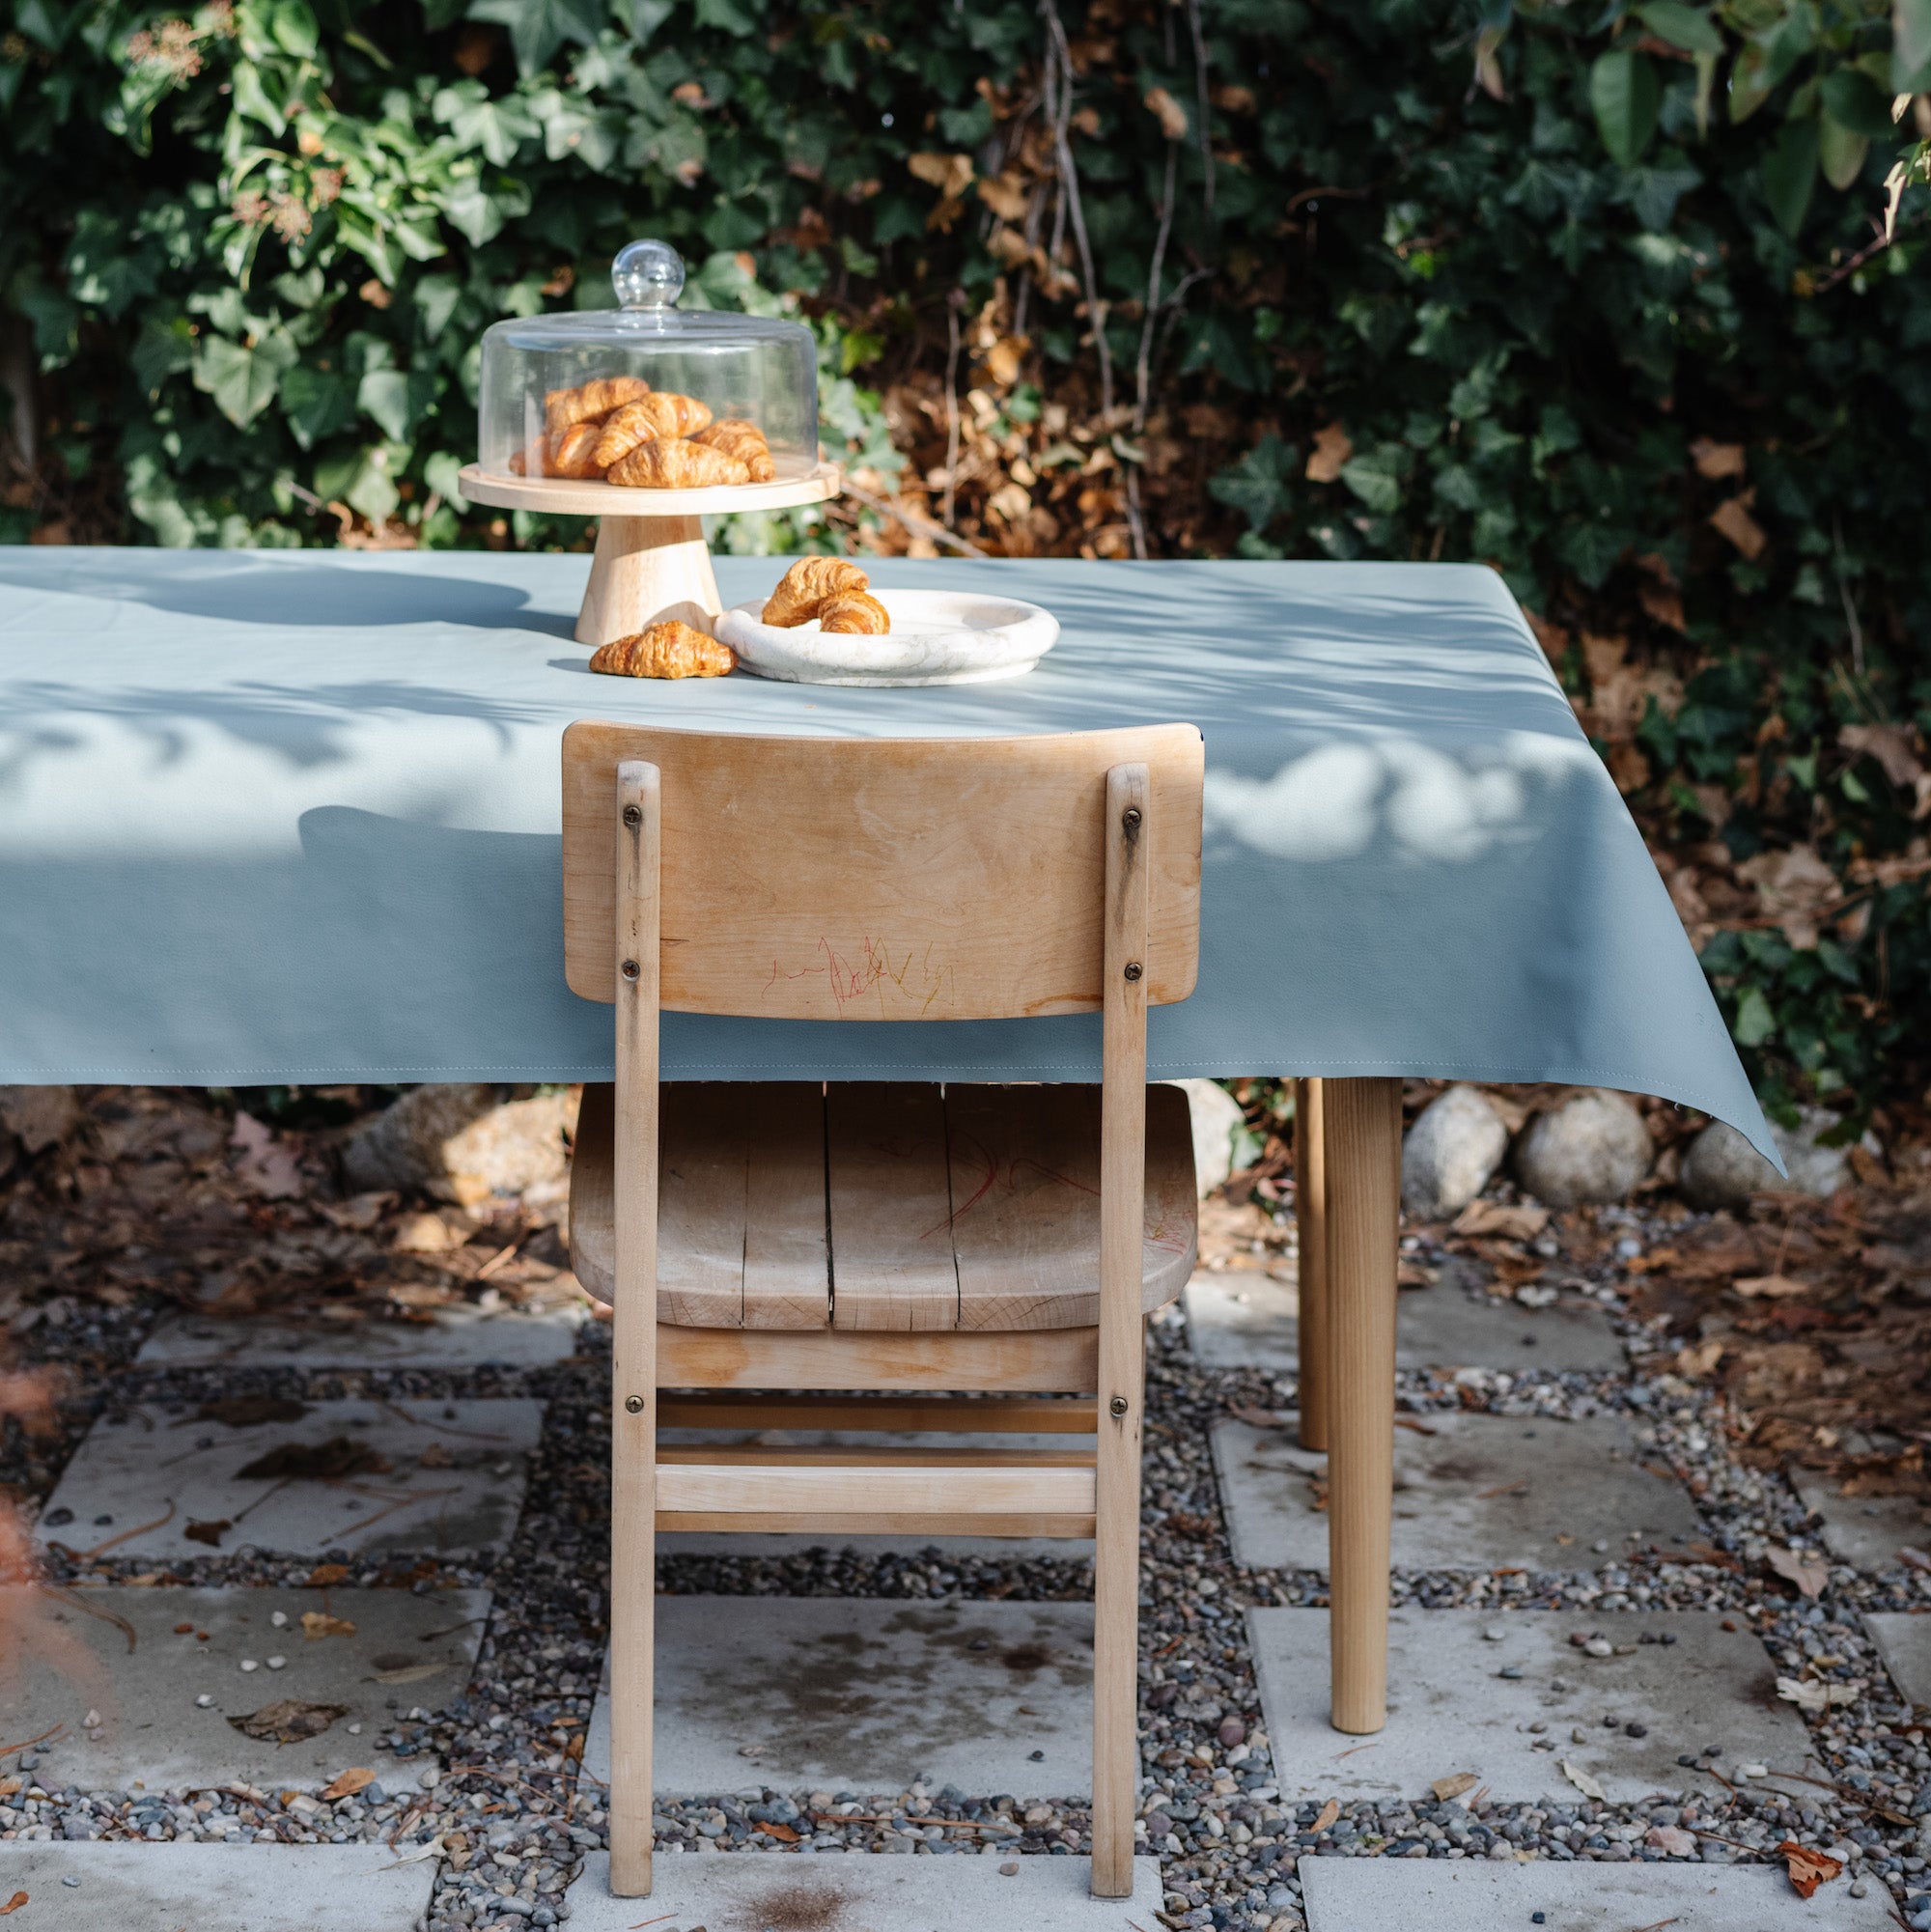 Amalfi / 6 Foot@Amalfi Tablecloth on a table outside near greenery